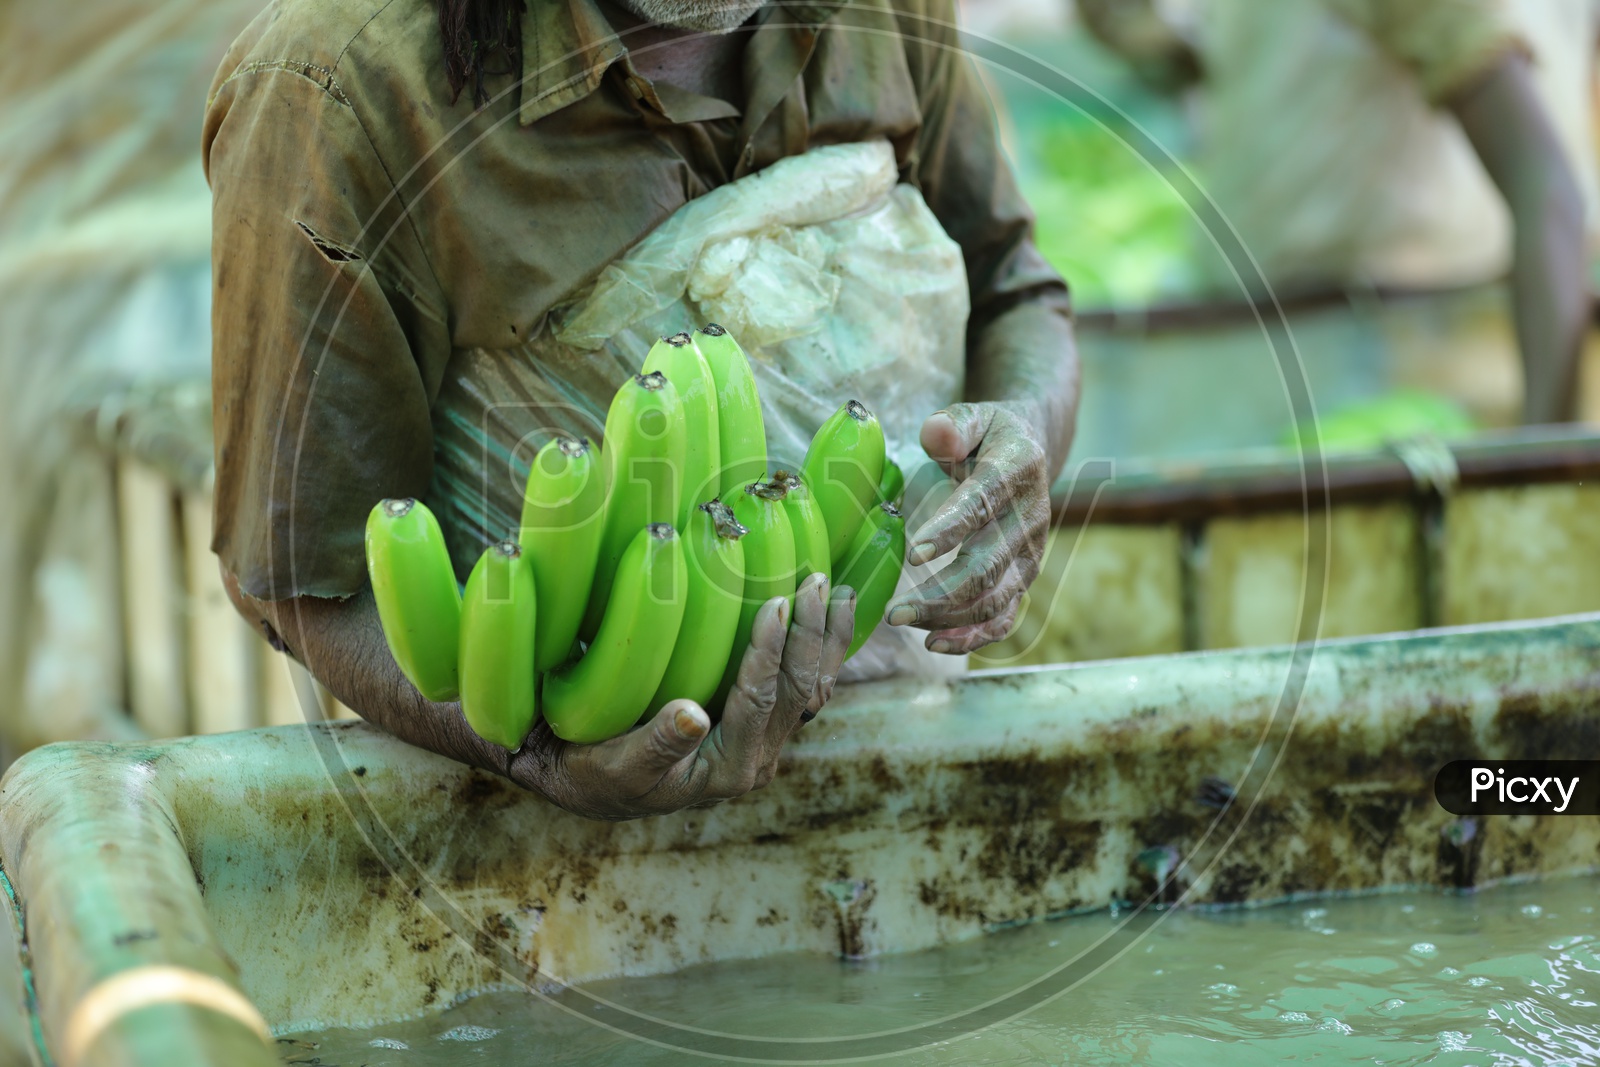 A Farmer Cleaning Banana Yield in tub